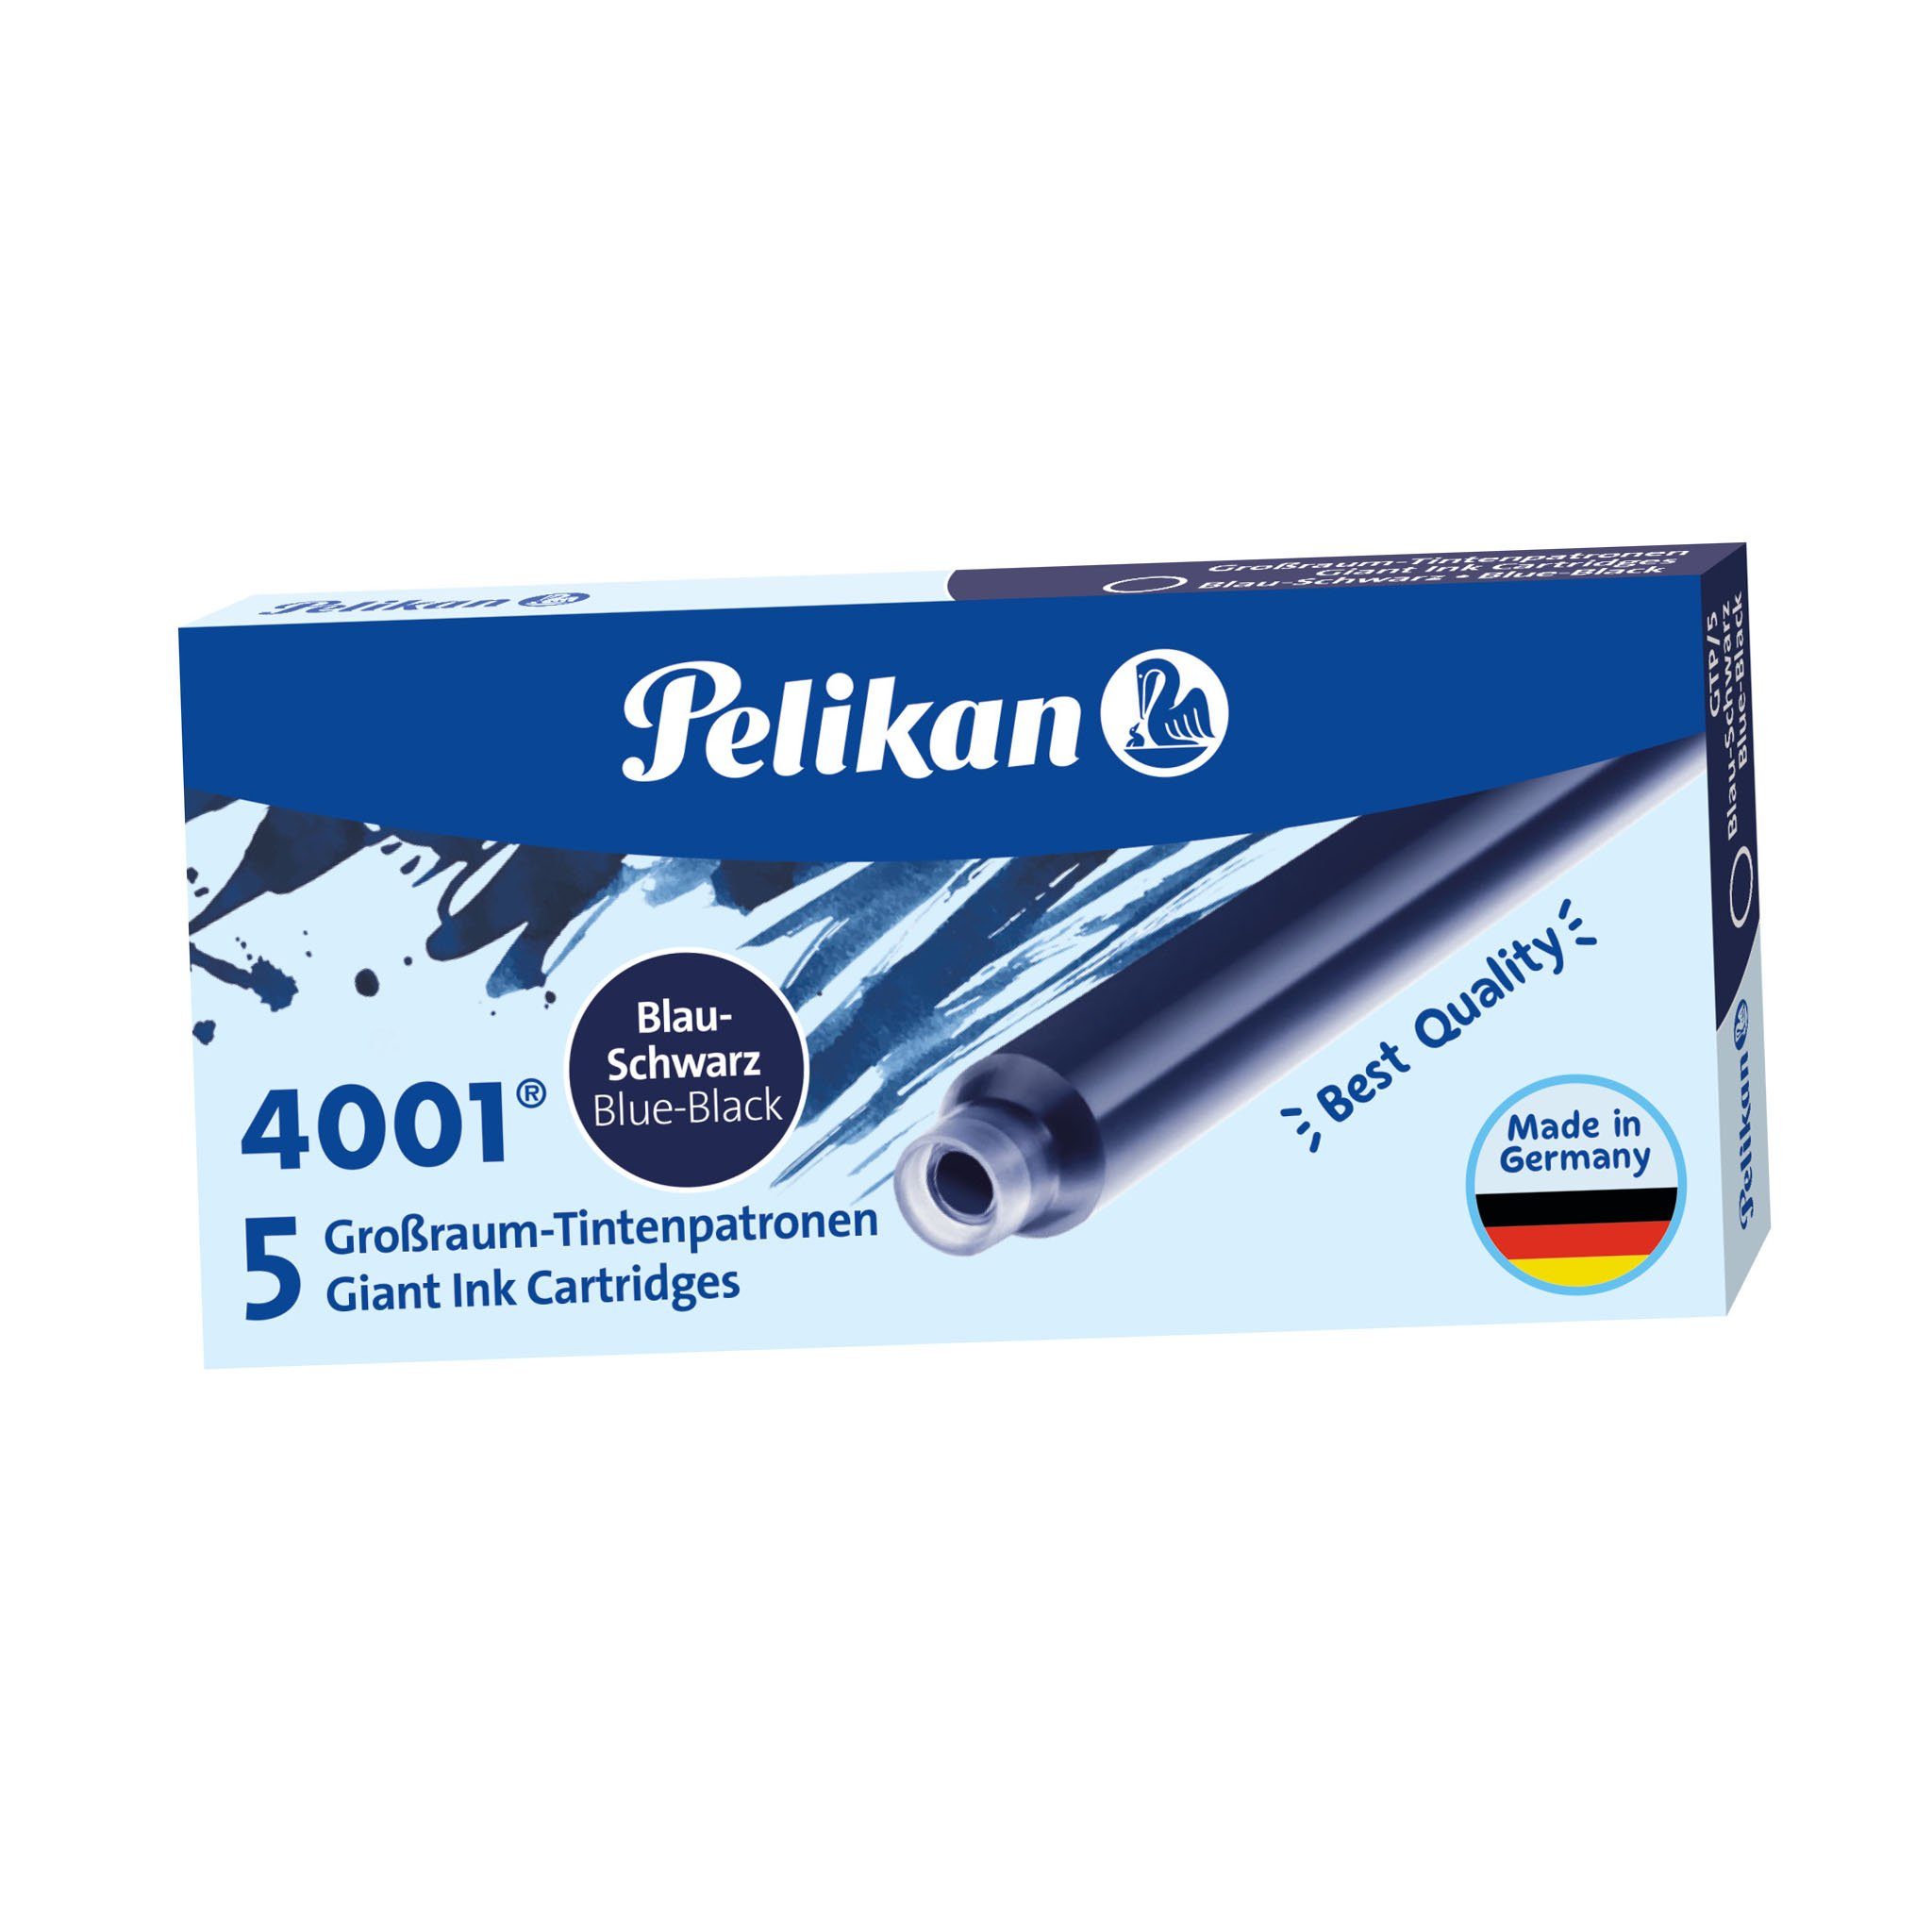 Pelikan Füllfederhalter blau-schwarz 4001 GTP/5, Großraum-Tintenpatronen Pelikan